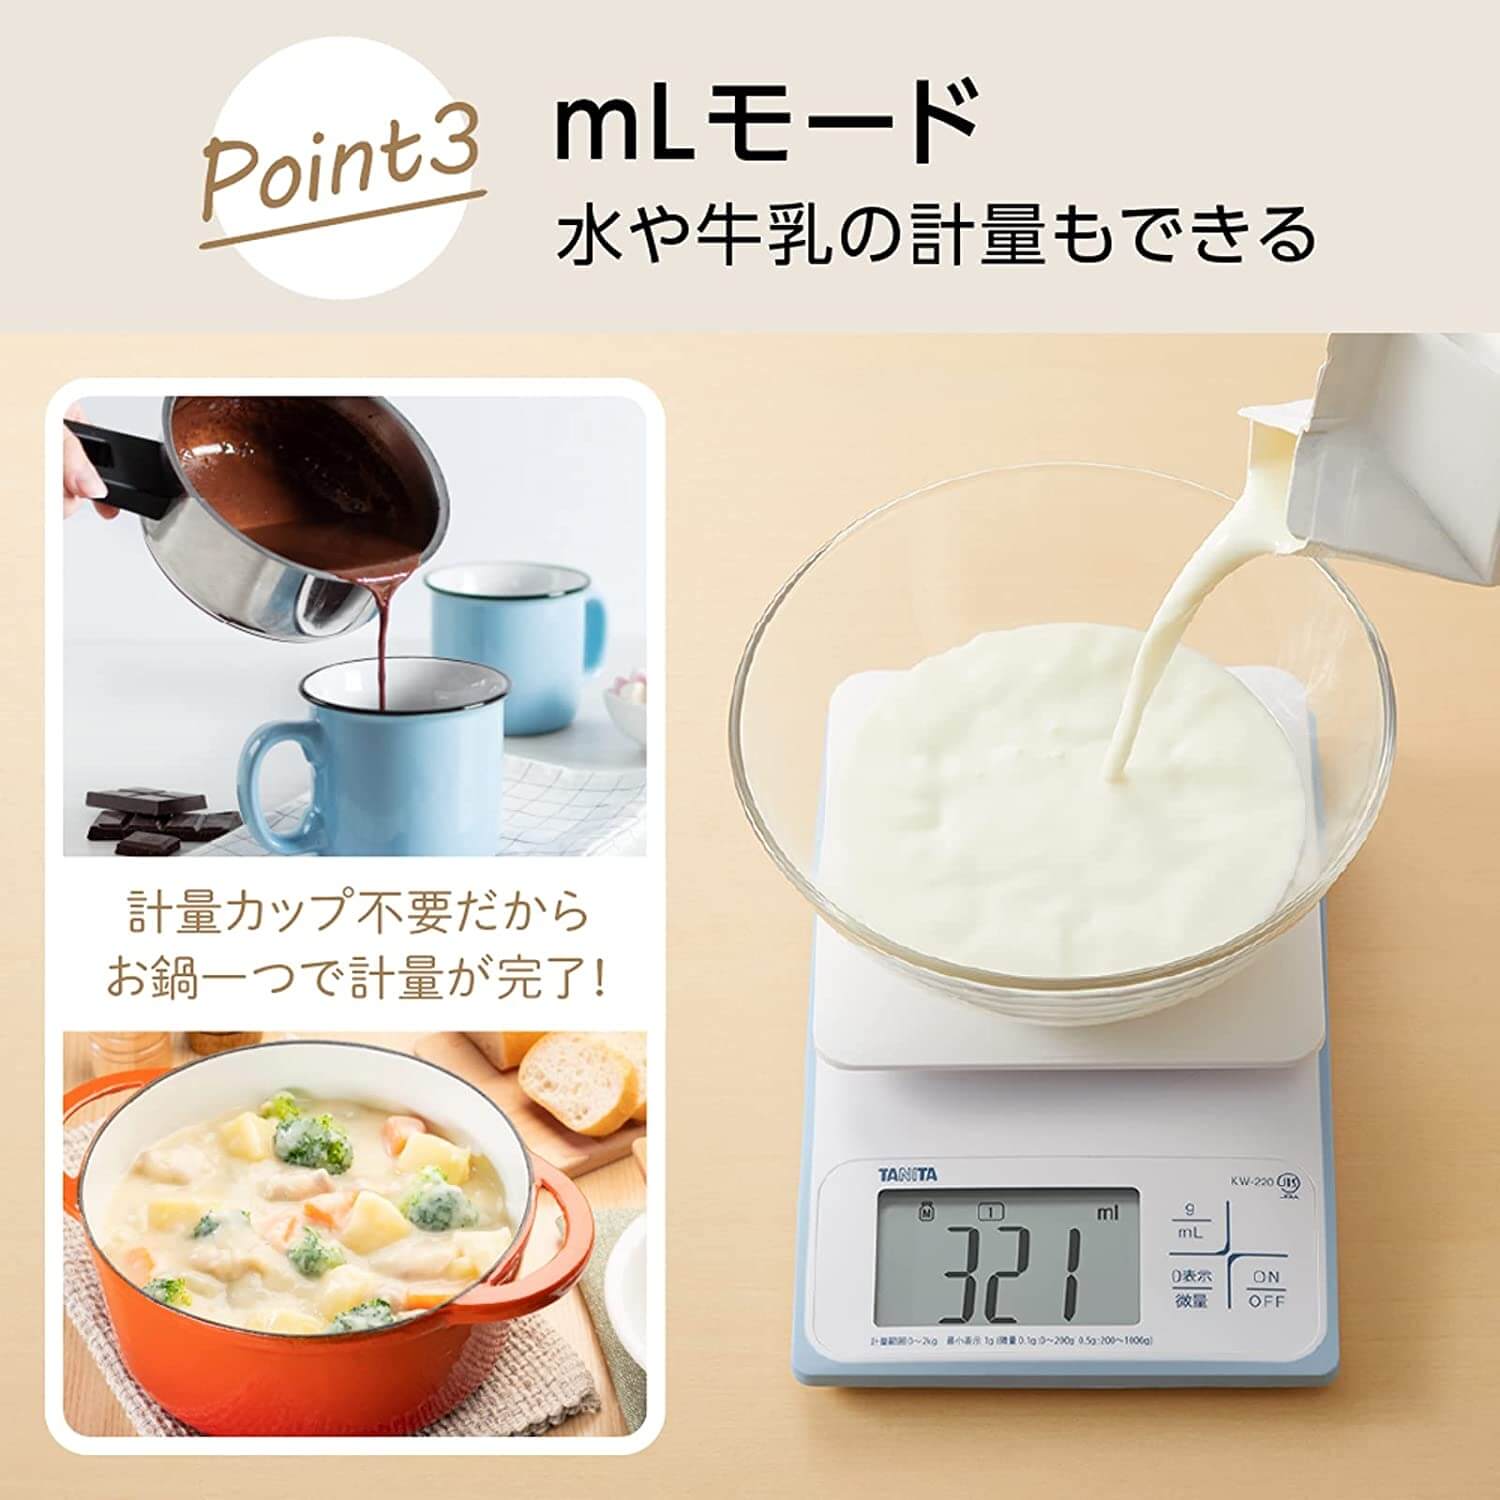 Waterproof Cooking Scale KW-220 - imy Shop Japan